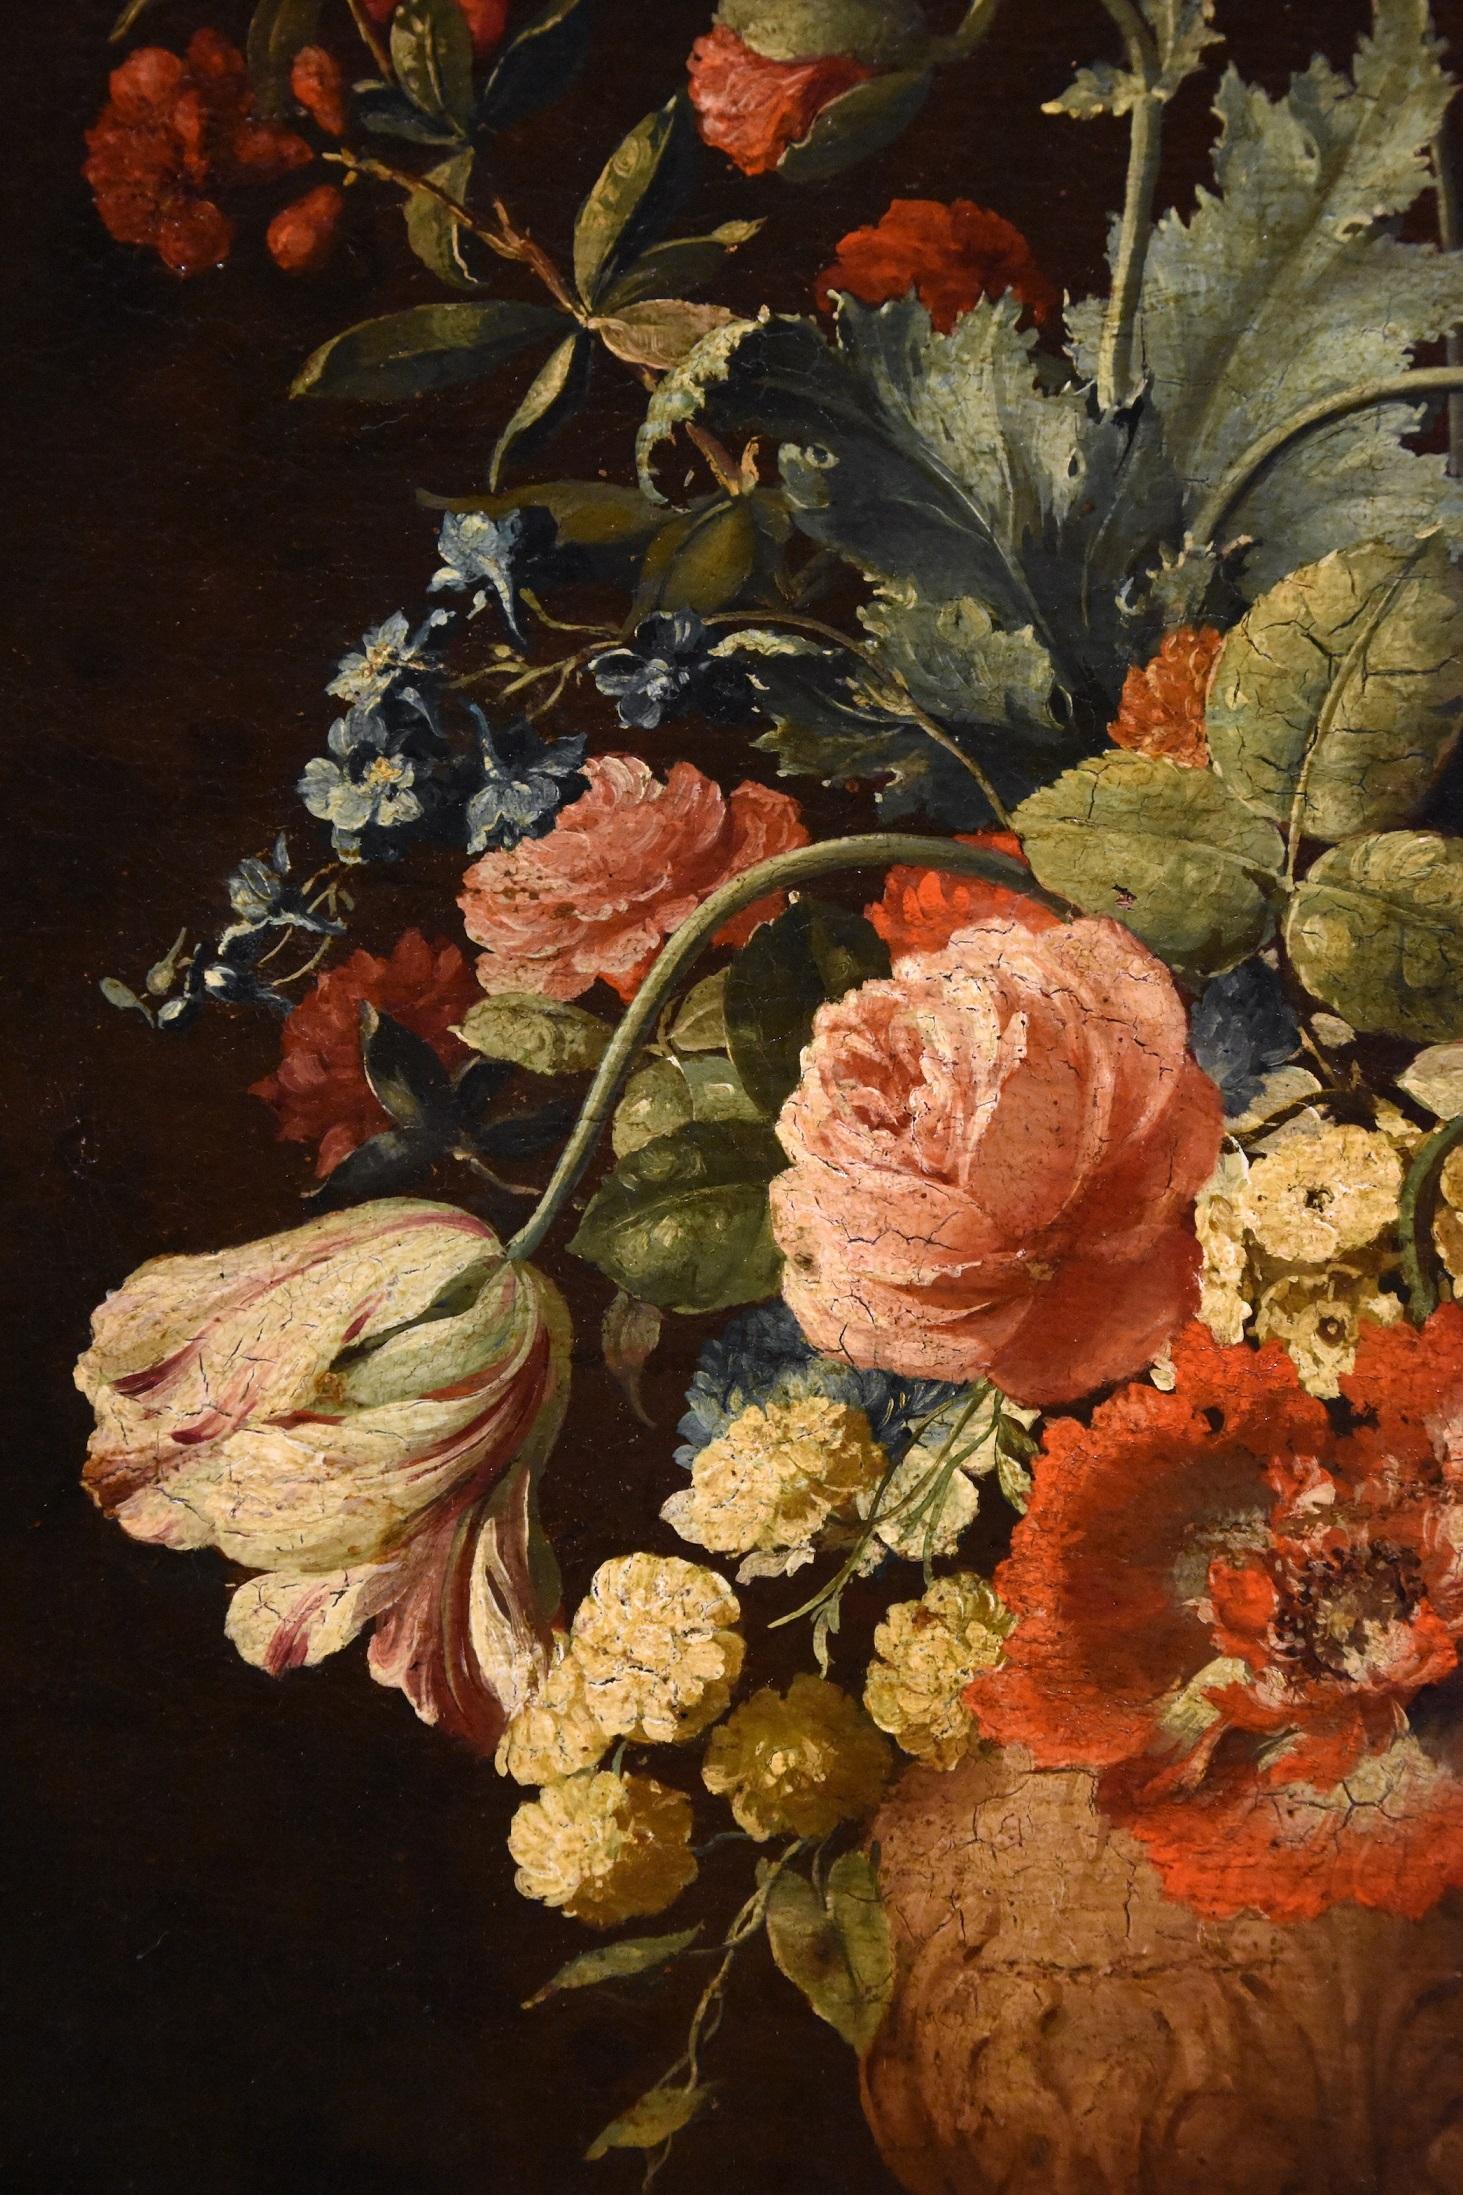 Still Life Flowers Van Huysum Paint Oil on canvas 18th Century Old master 5